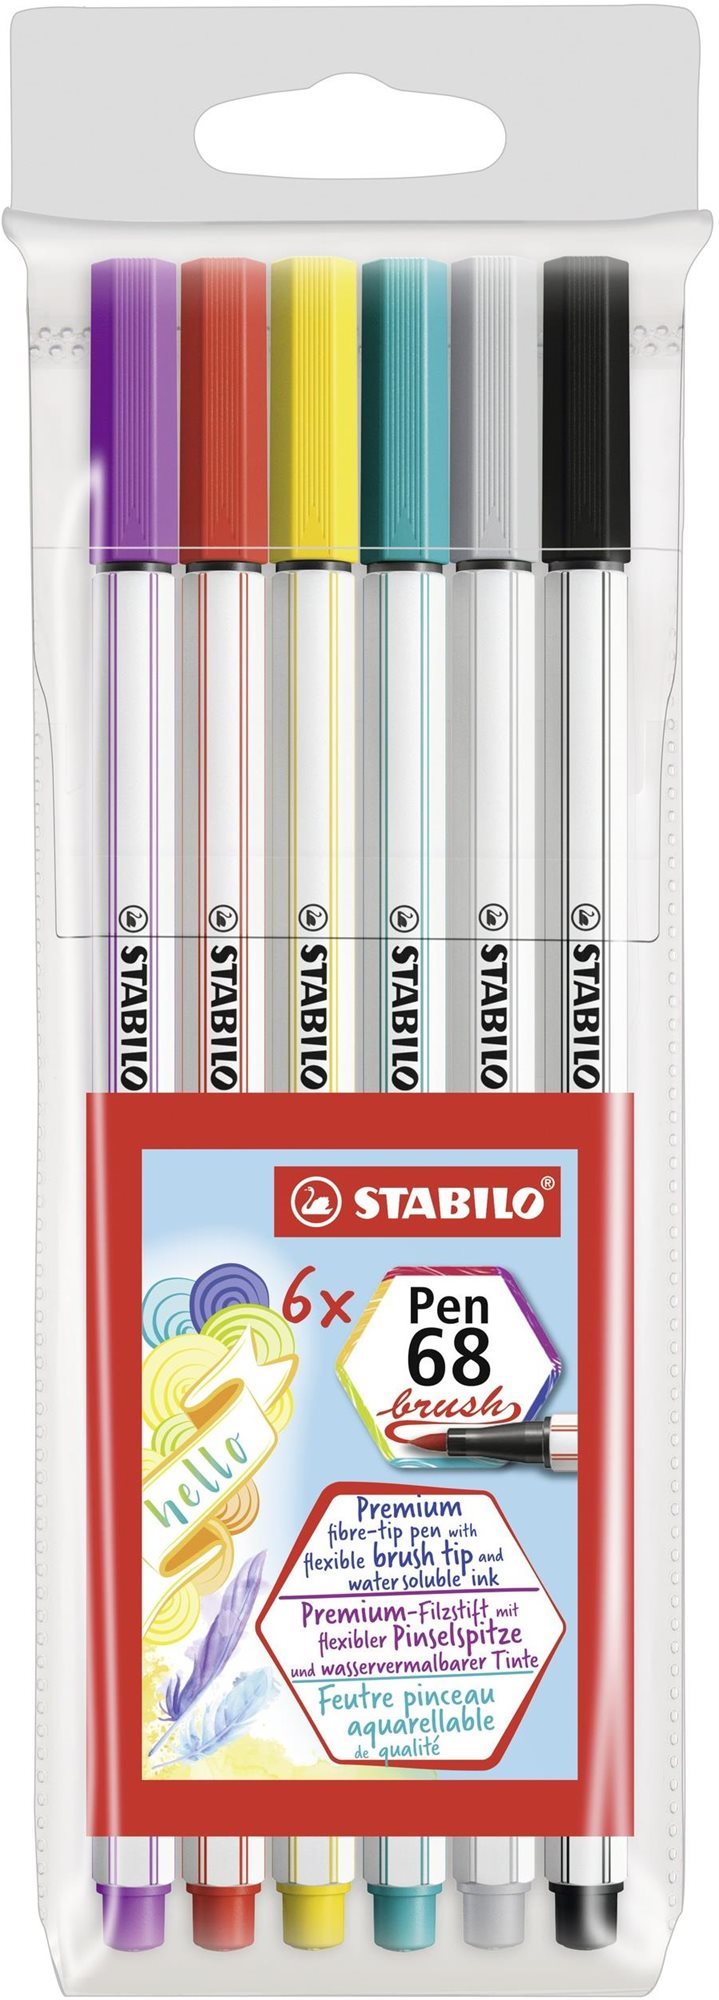 STABILO Pen 68 brush 6 db tok